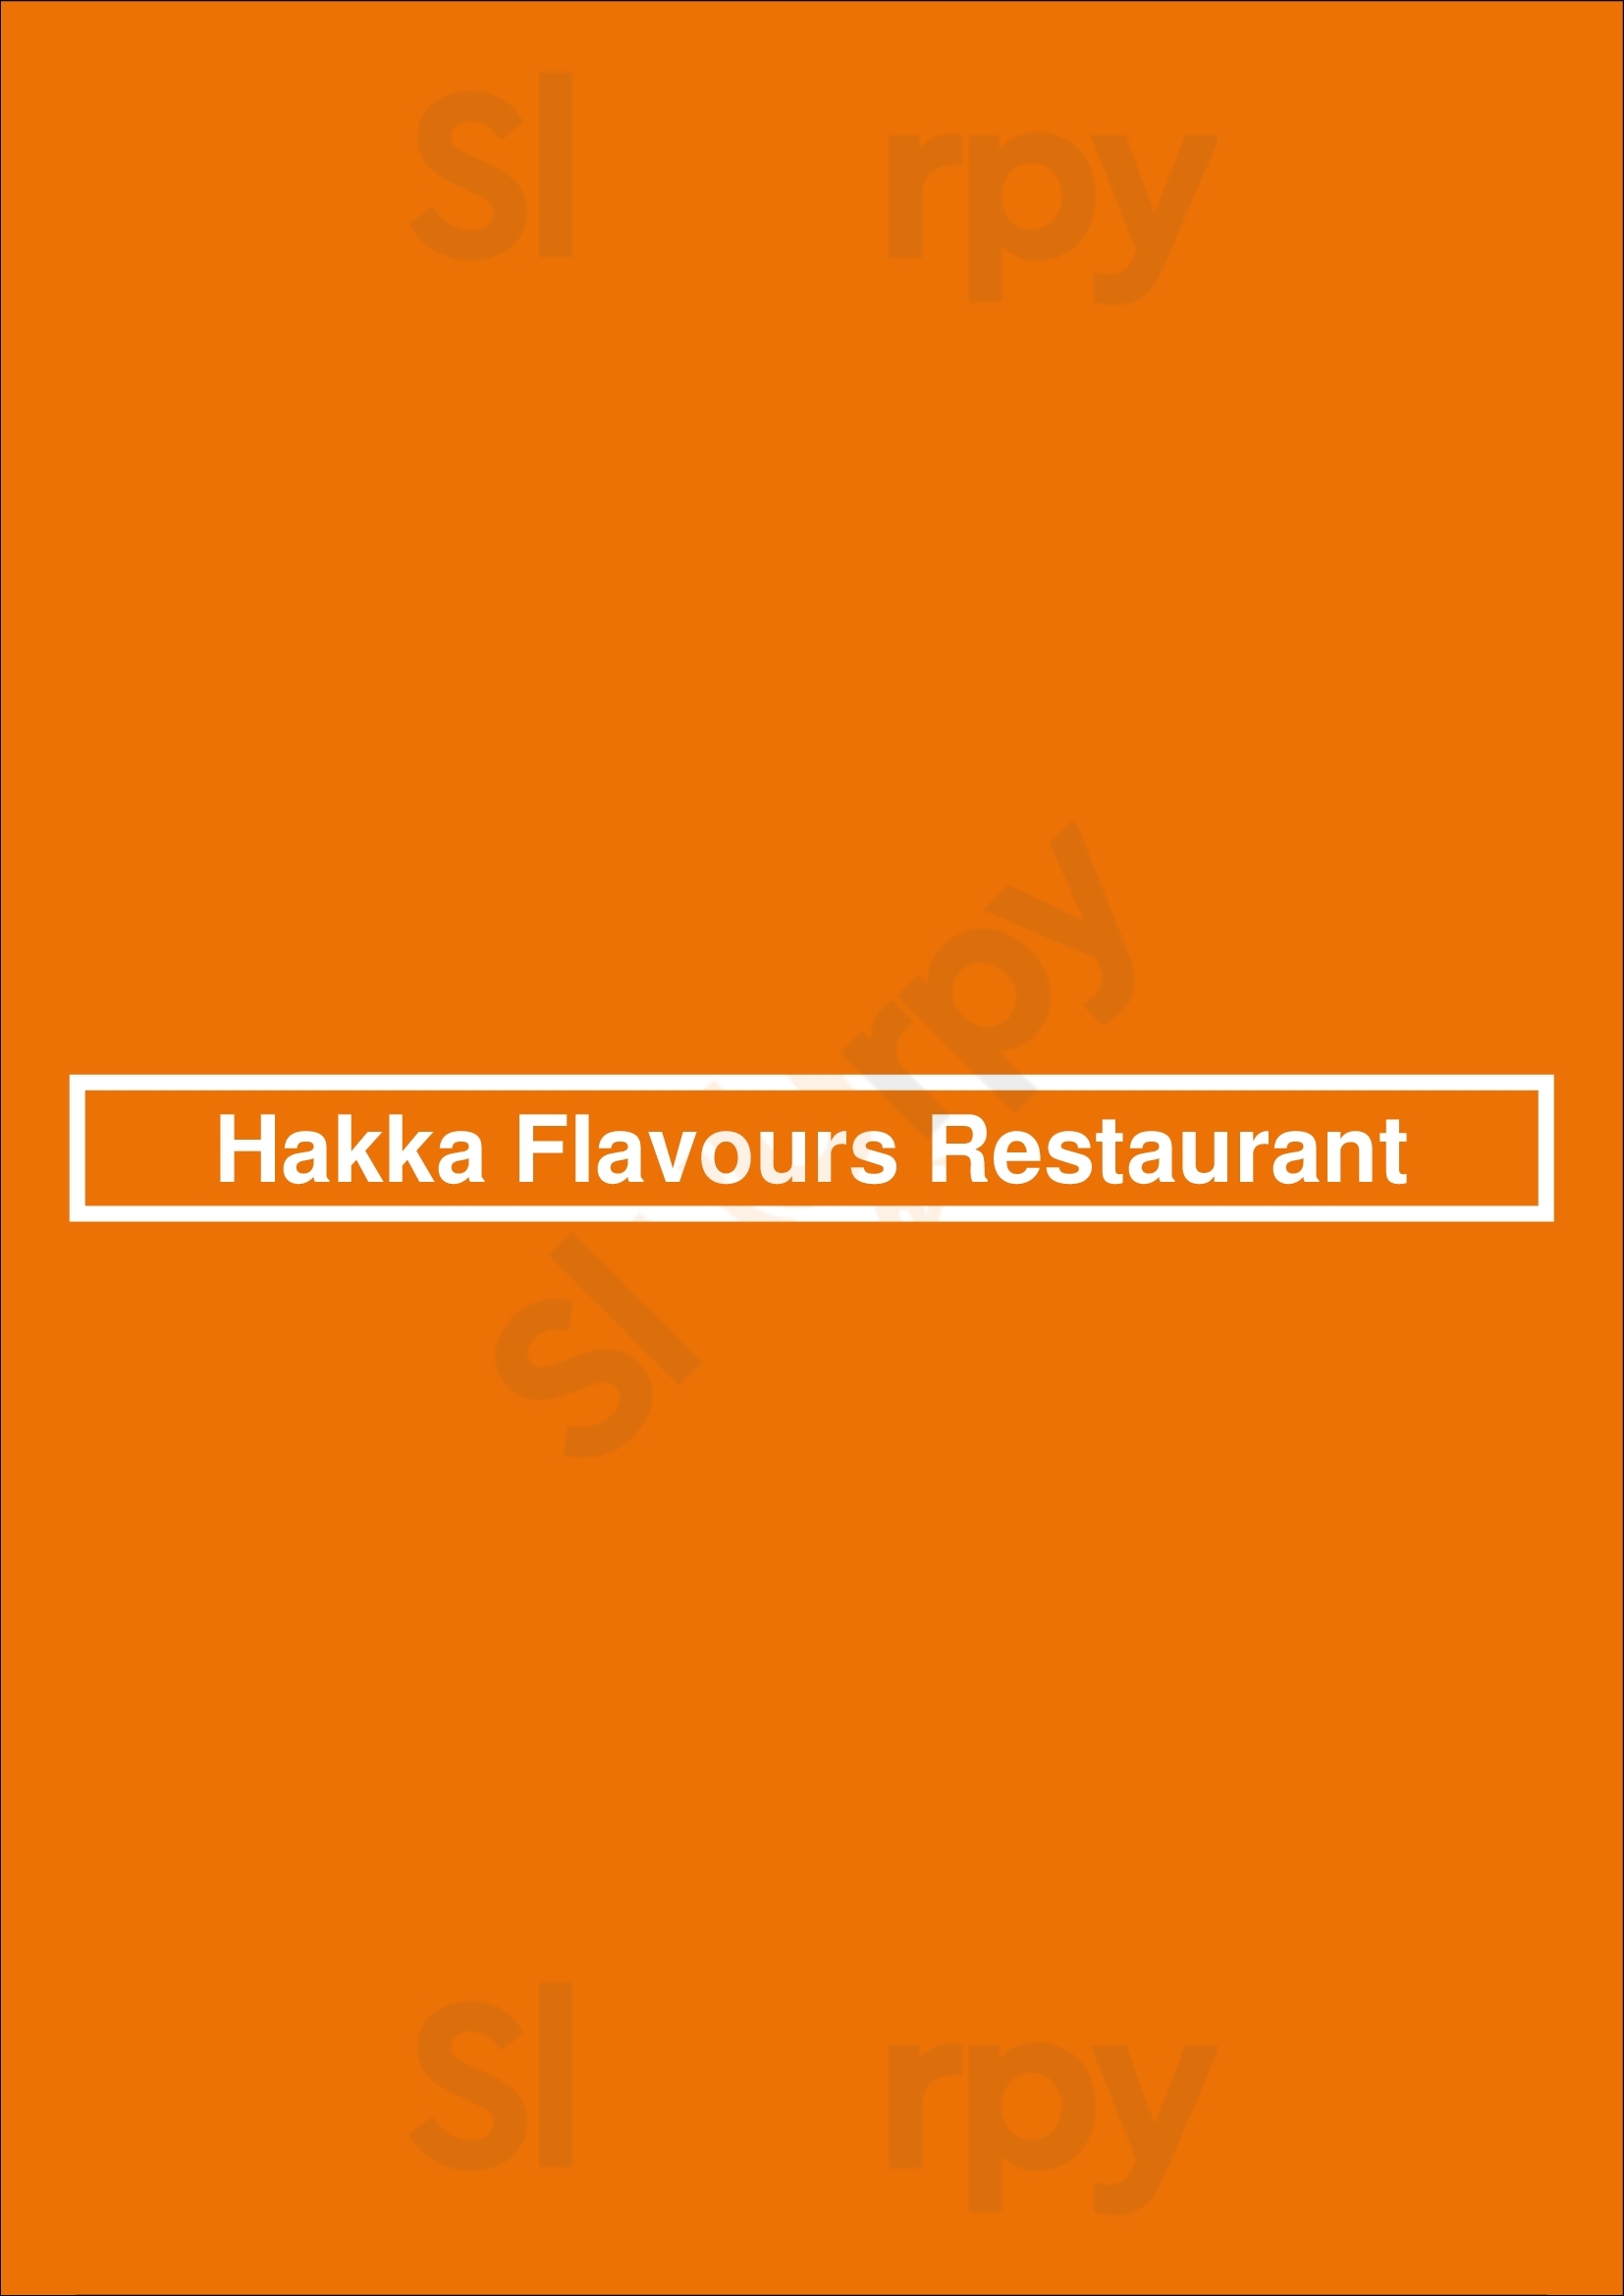 Hakka Flavours Restaurant Brampton Menu - 1